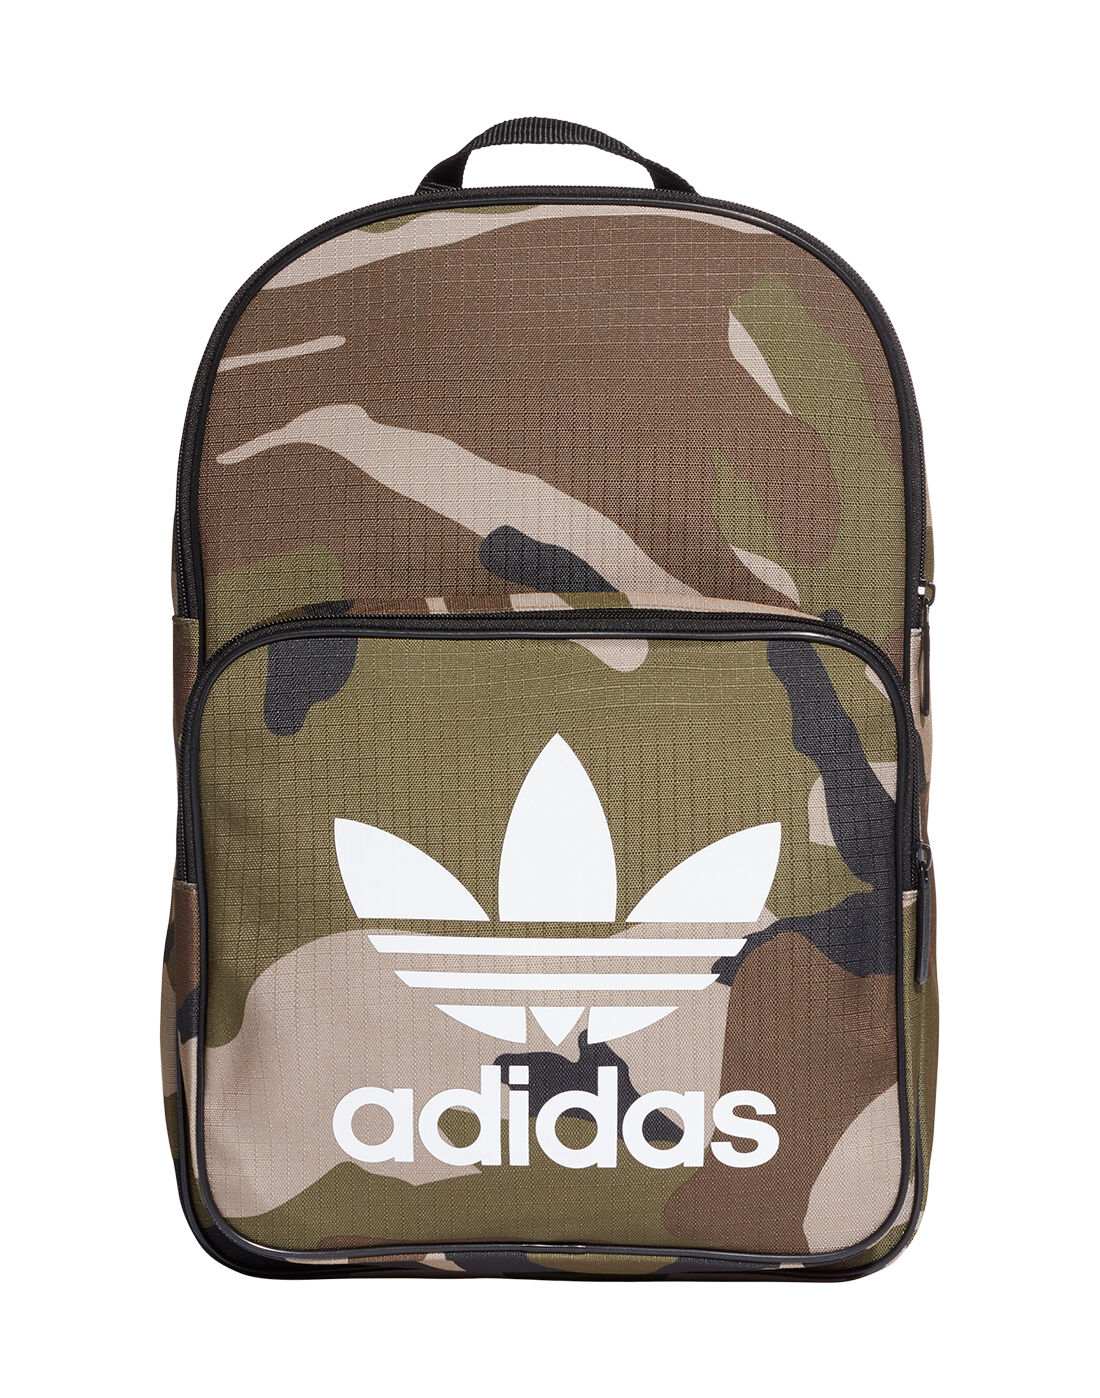 adidas camouflage backpack